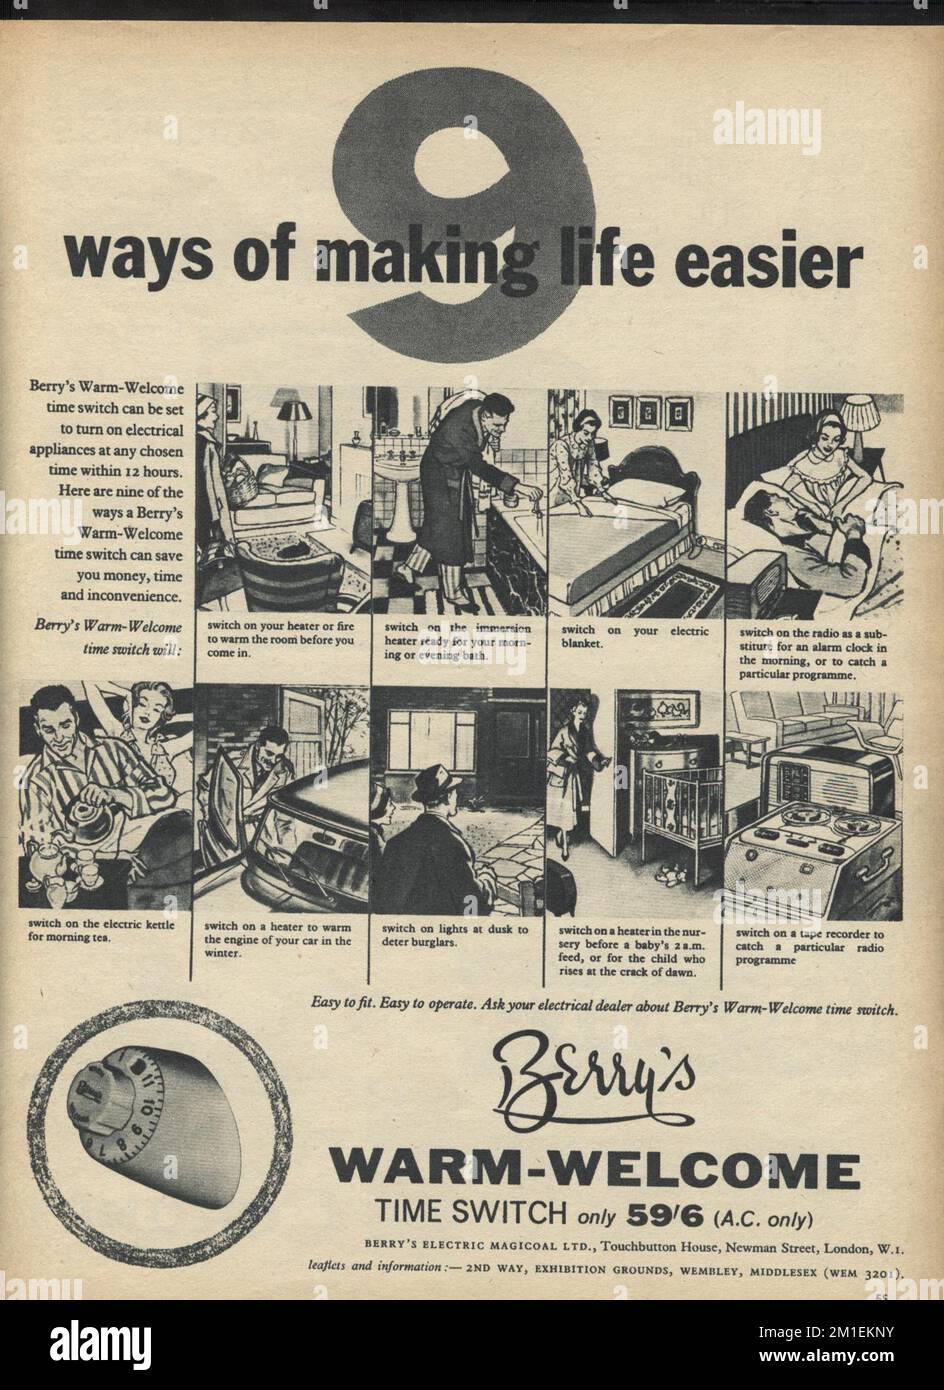 Appliance Wheels Advertisement, December 1977. : r/vintageads